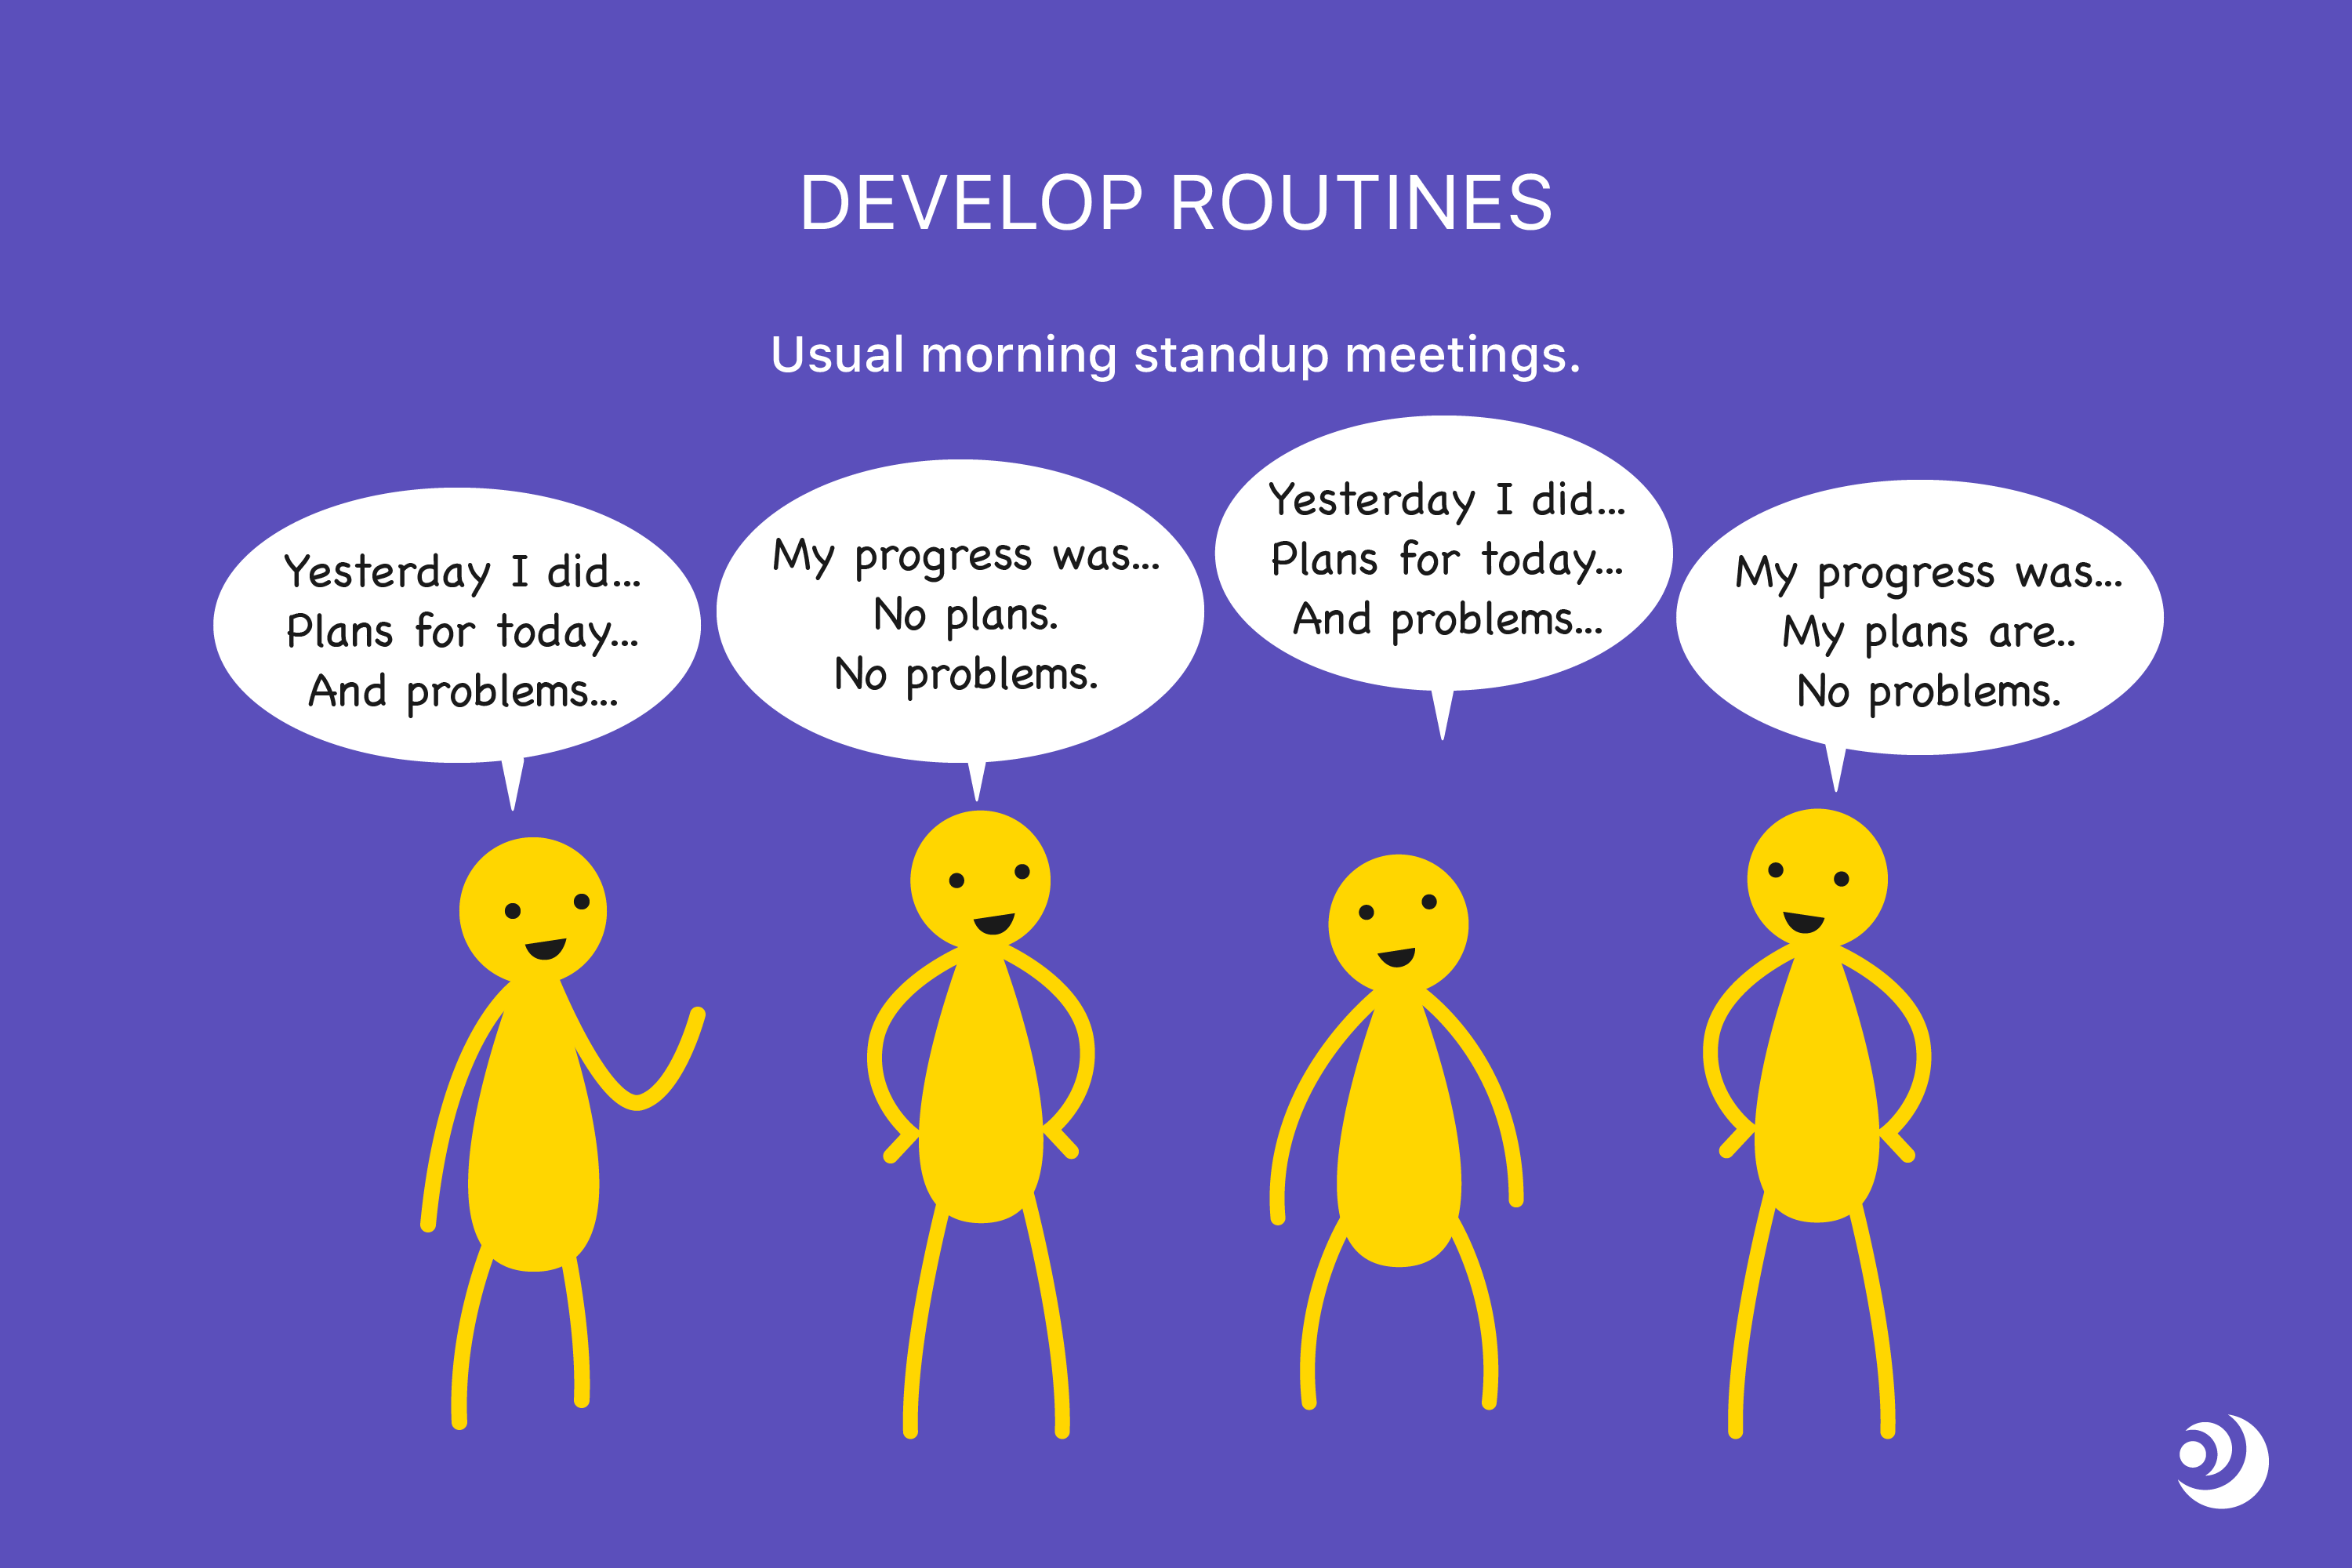 agile software development rewquires that you develop a routine
